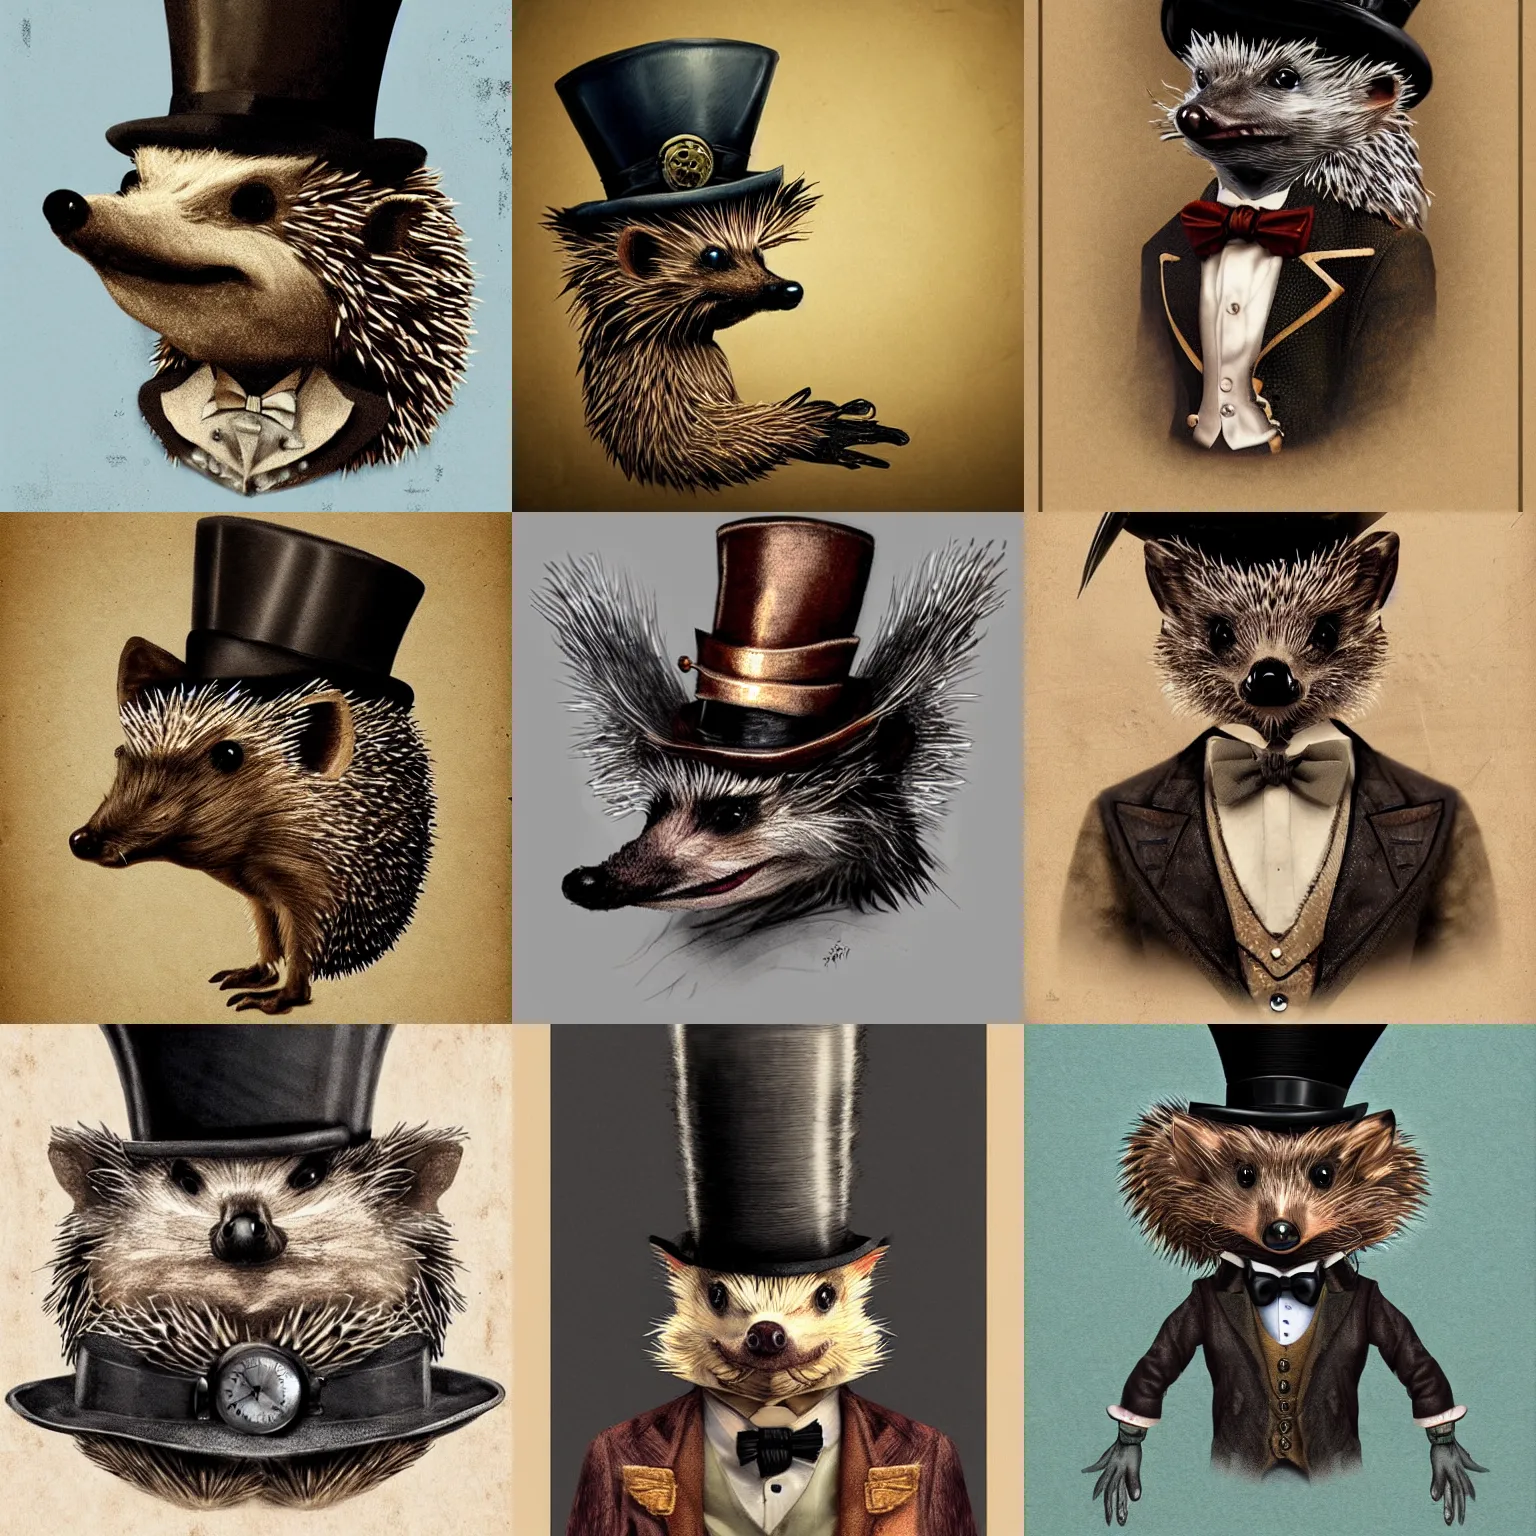 Prompt: hedgehog wearing a top hat, steampunk, portrait, detailed, intricate, digital art, trending on artstation